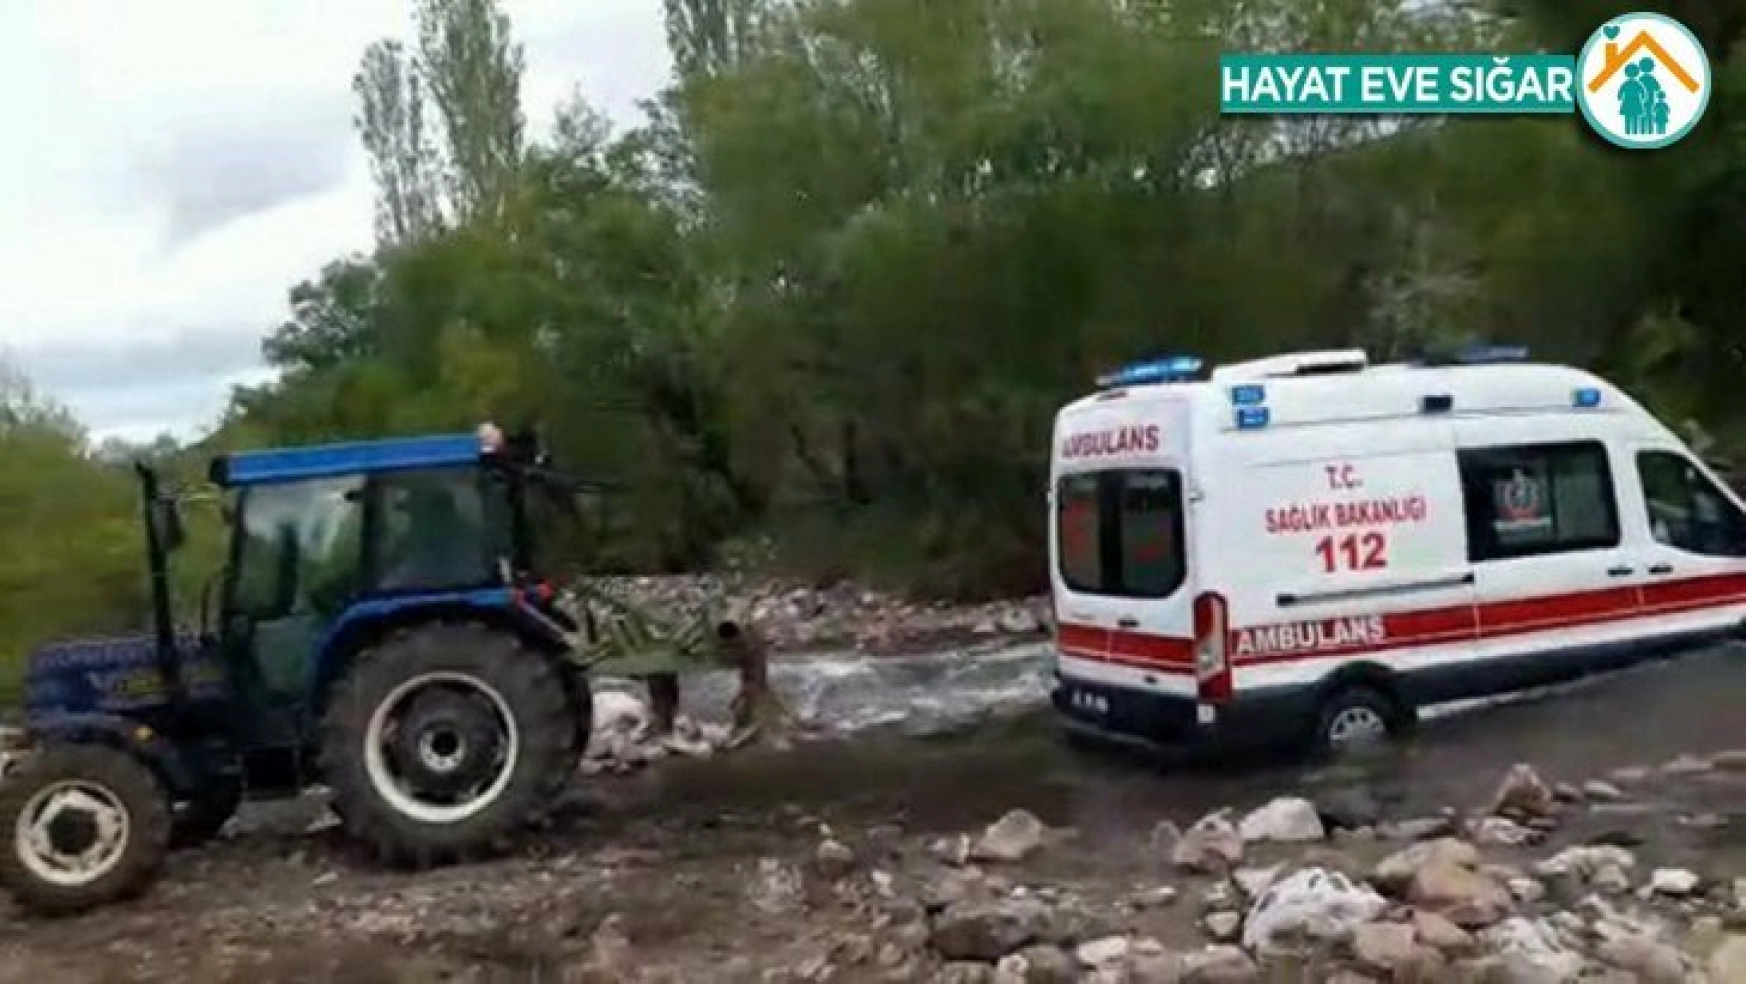 Çayda mahsur kalan ambulansın yardımına köylüler yetişti